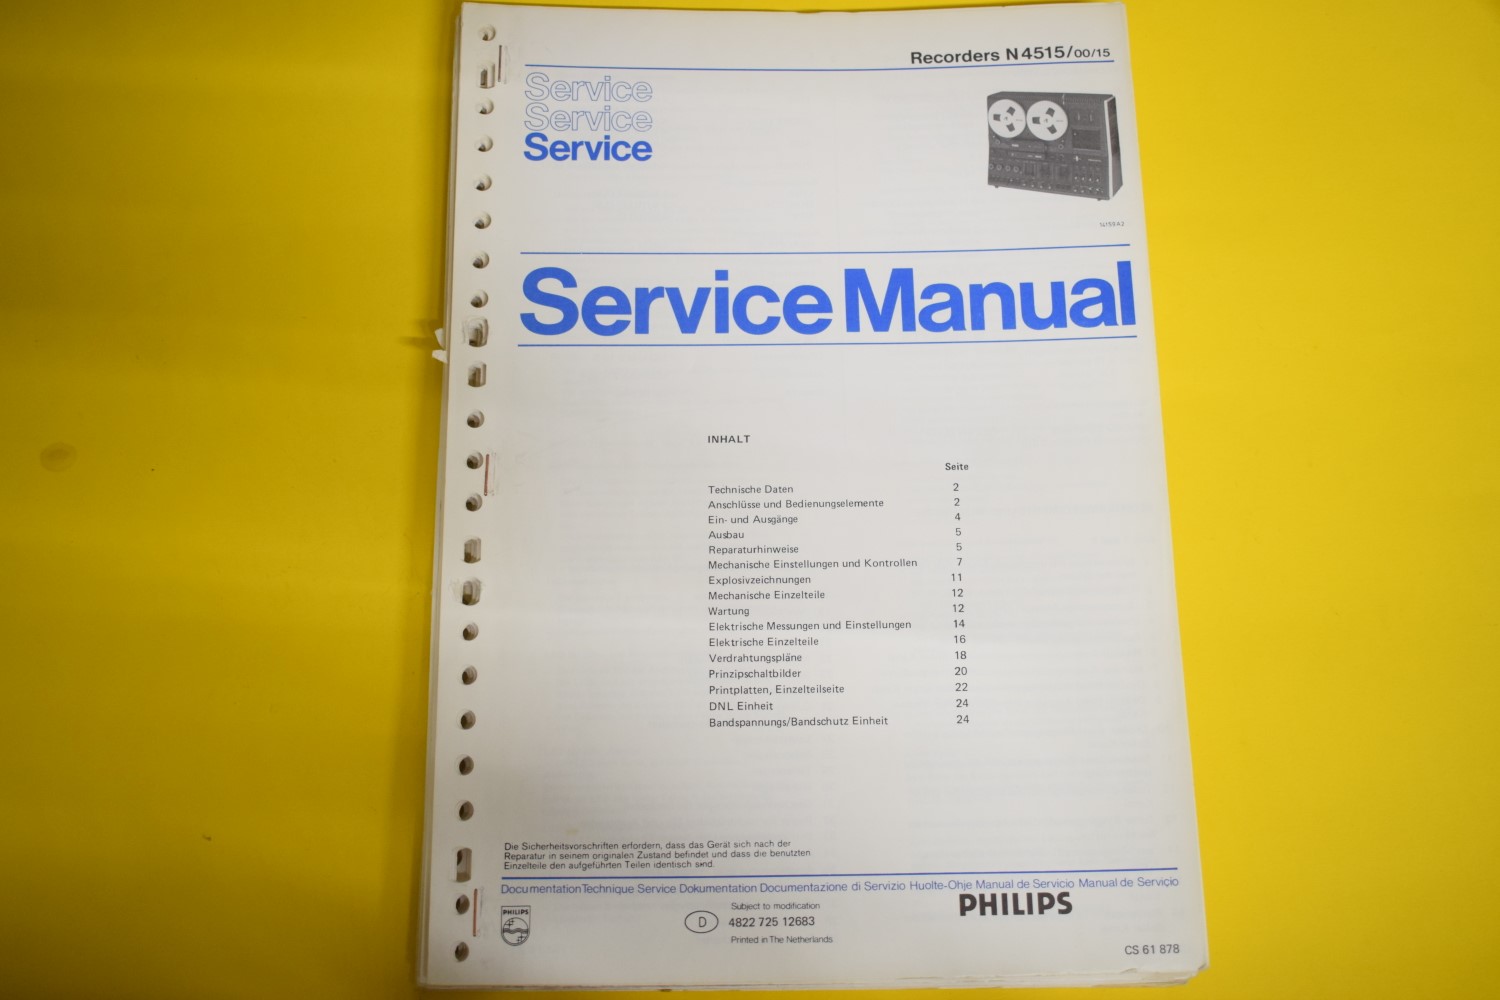 Philips N4515 Tape Recorder Service Manual – German